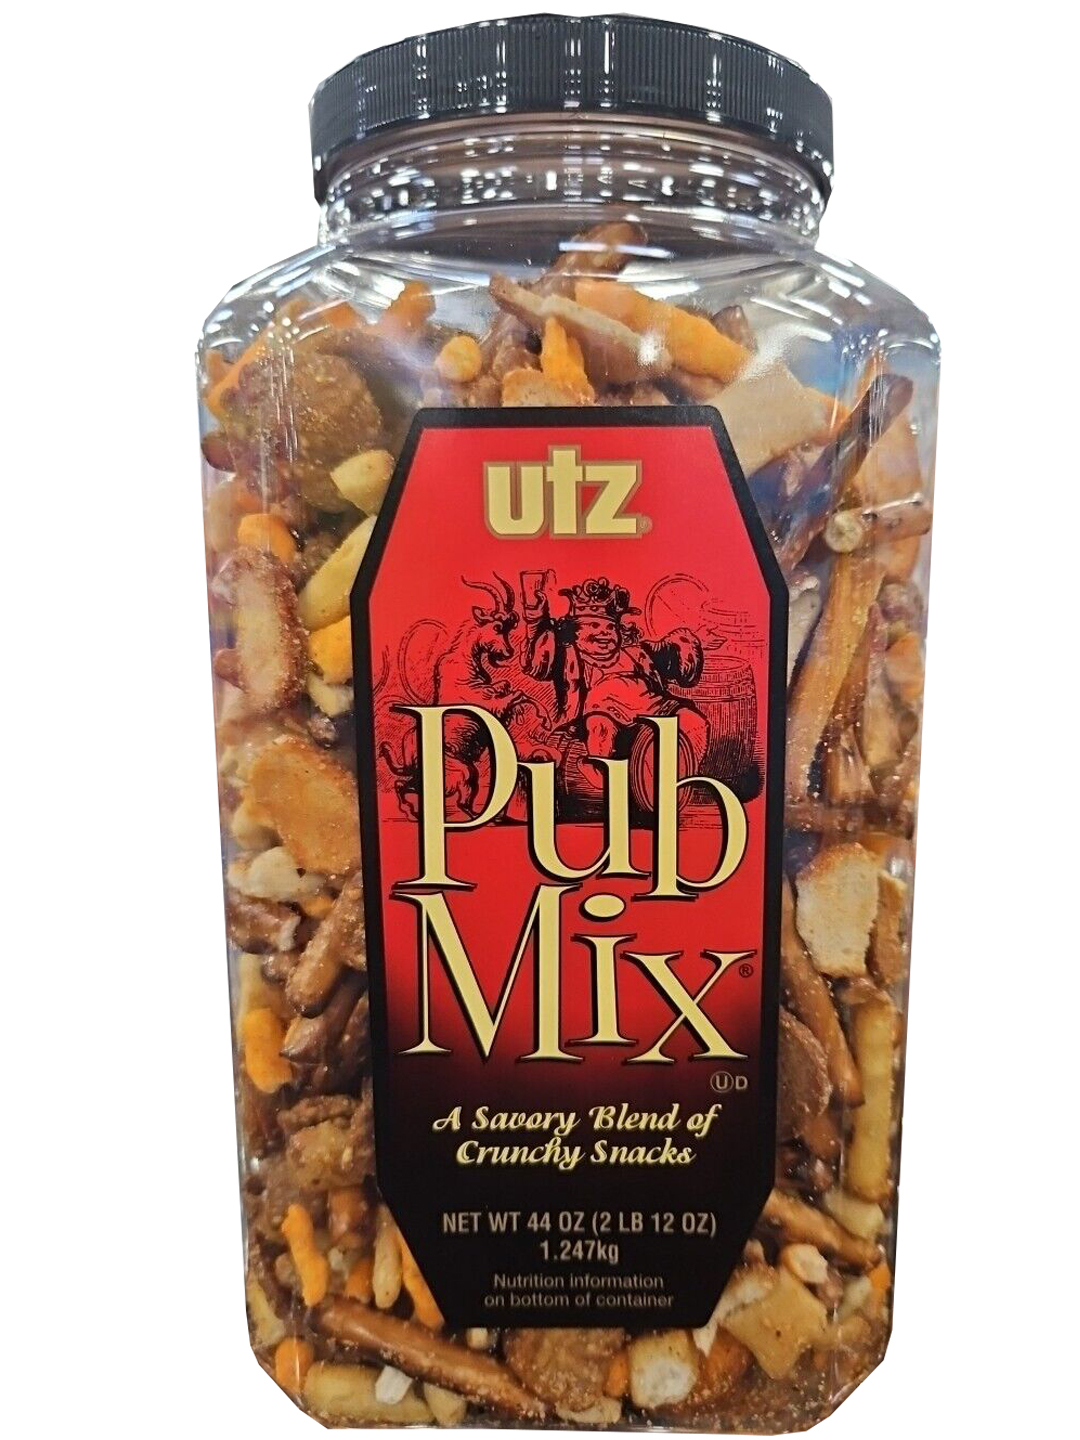 Utz Pub Mix - 44 Ounce Barrel - Savory Snack Mix, Blend of Crunchy Flavors for a - $21.90